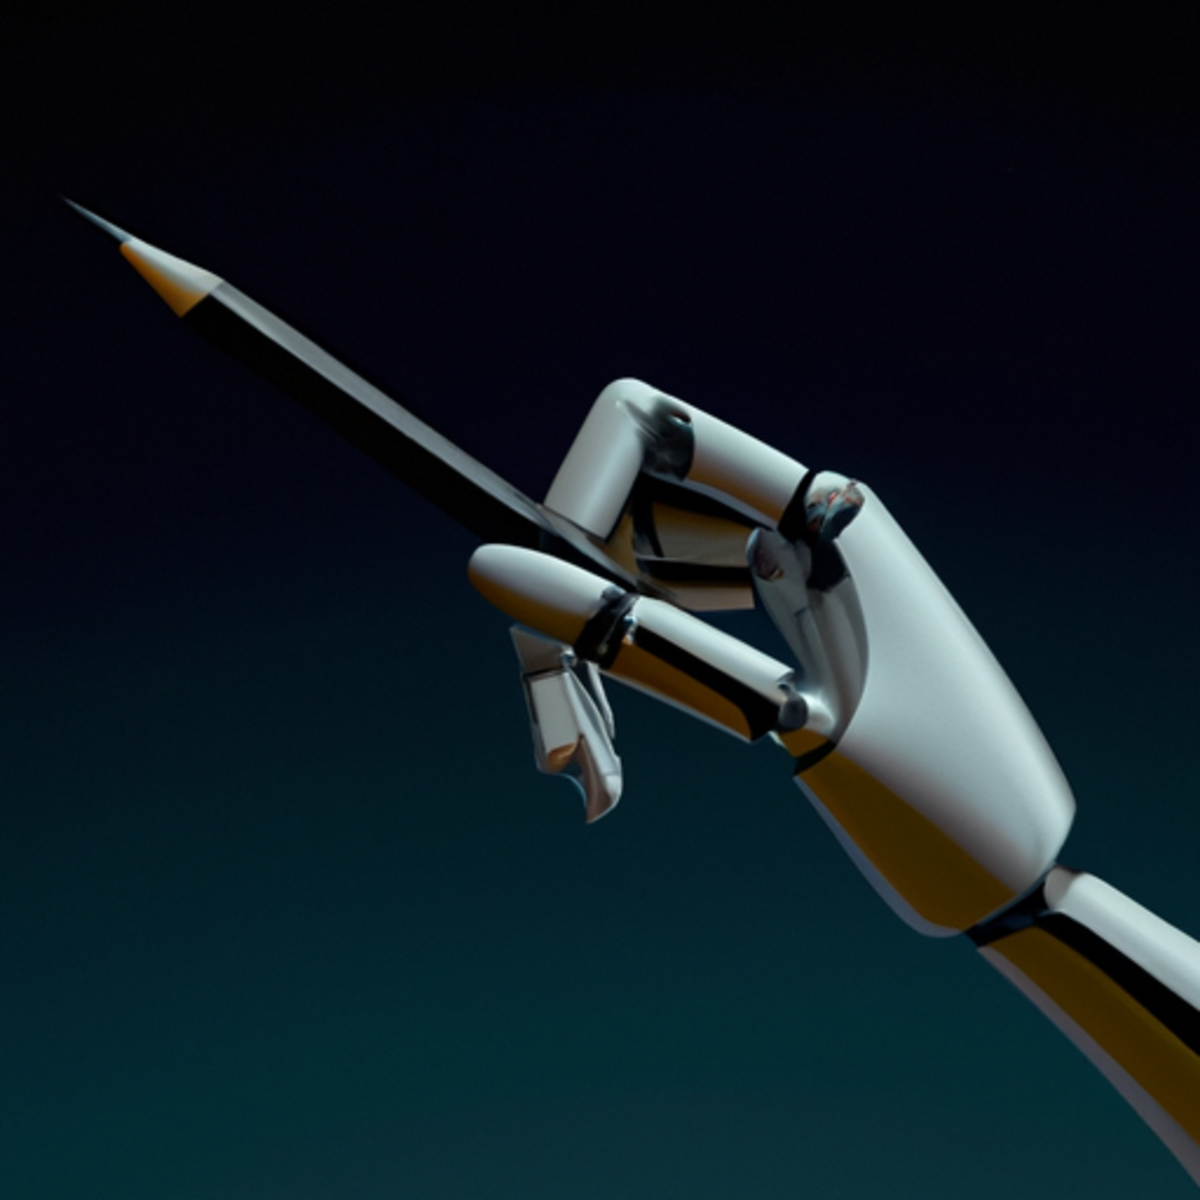 A digital art representation of a futuristic robot hand holding a pen, symbolizing AI writing tools.